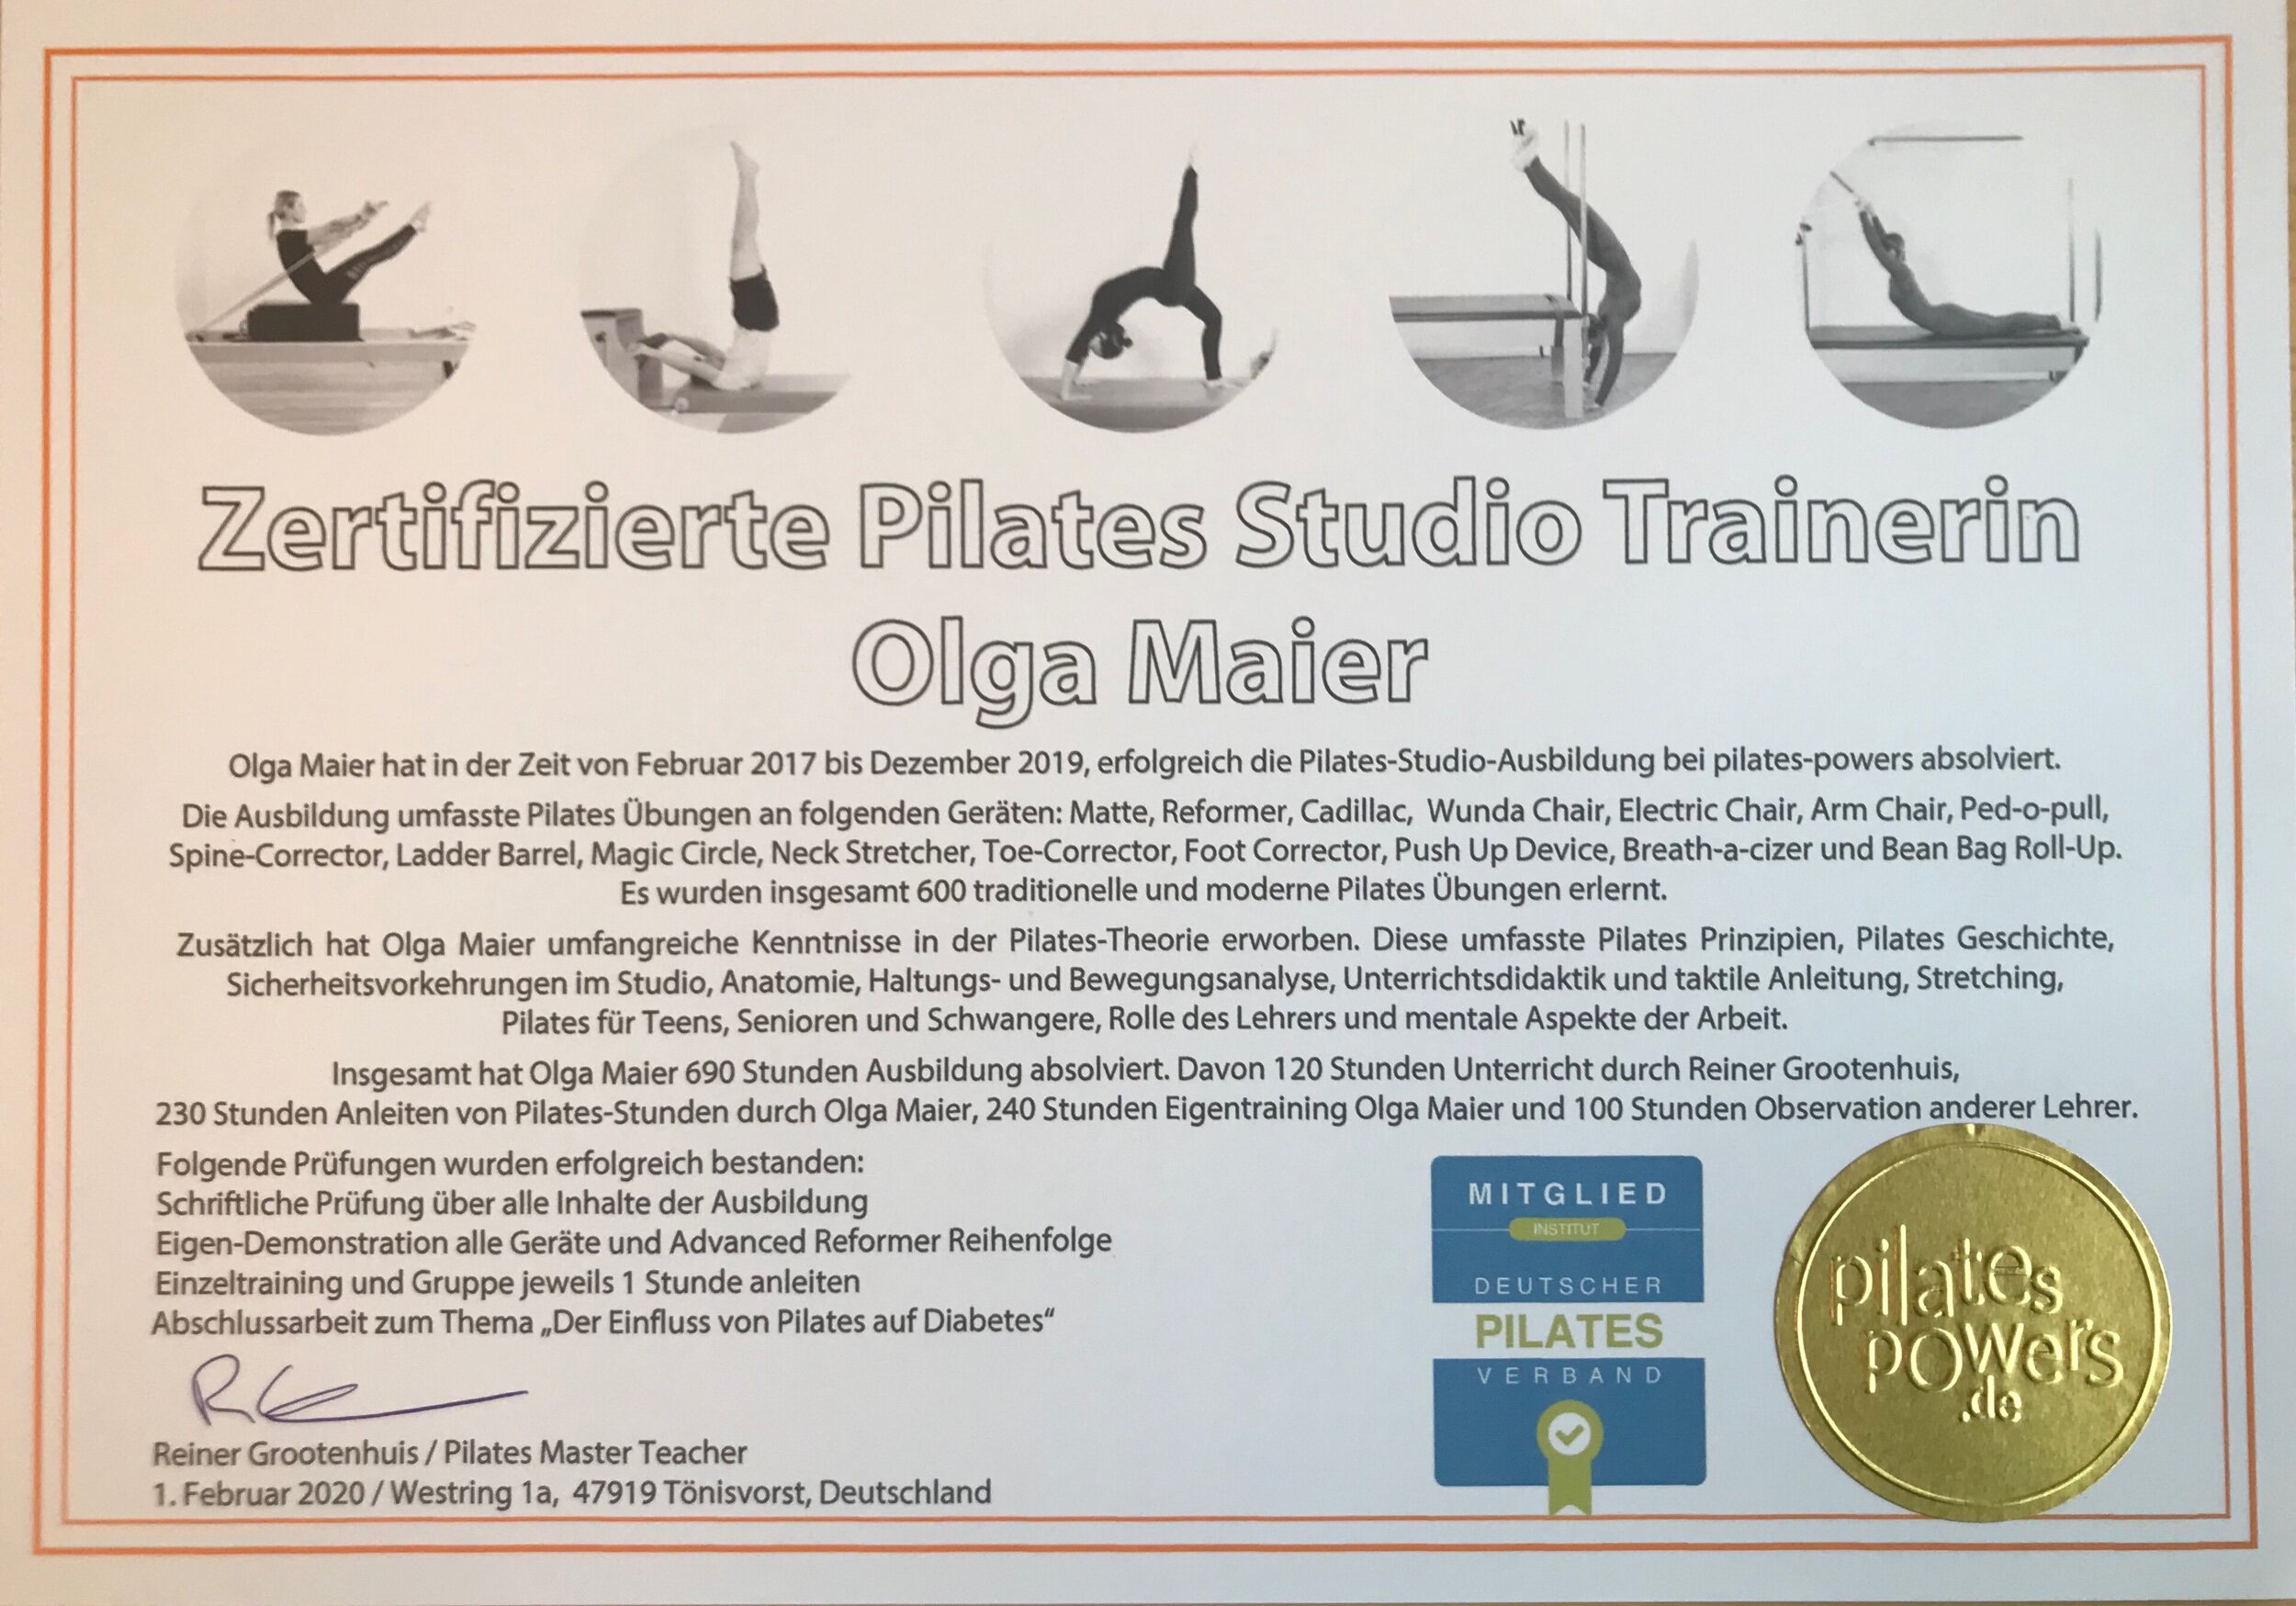 Zertifizierte Pilates Studio Trainerin